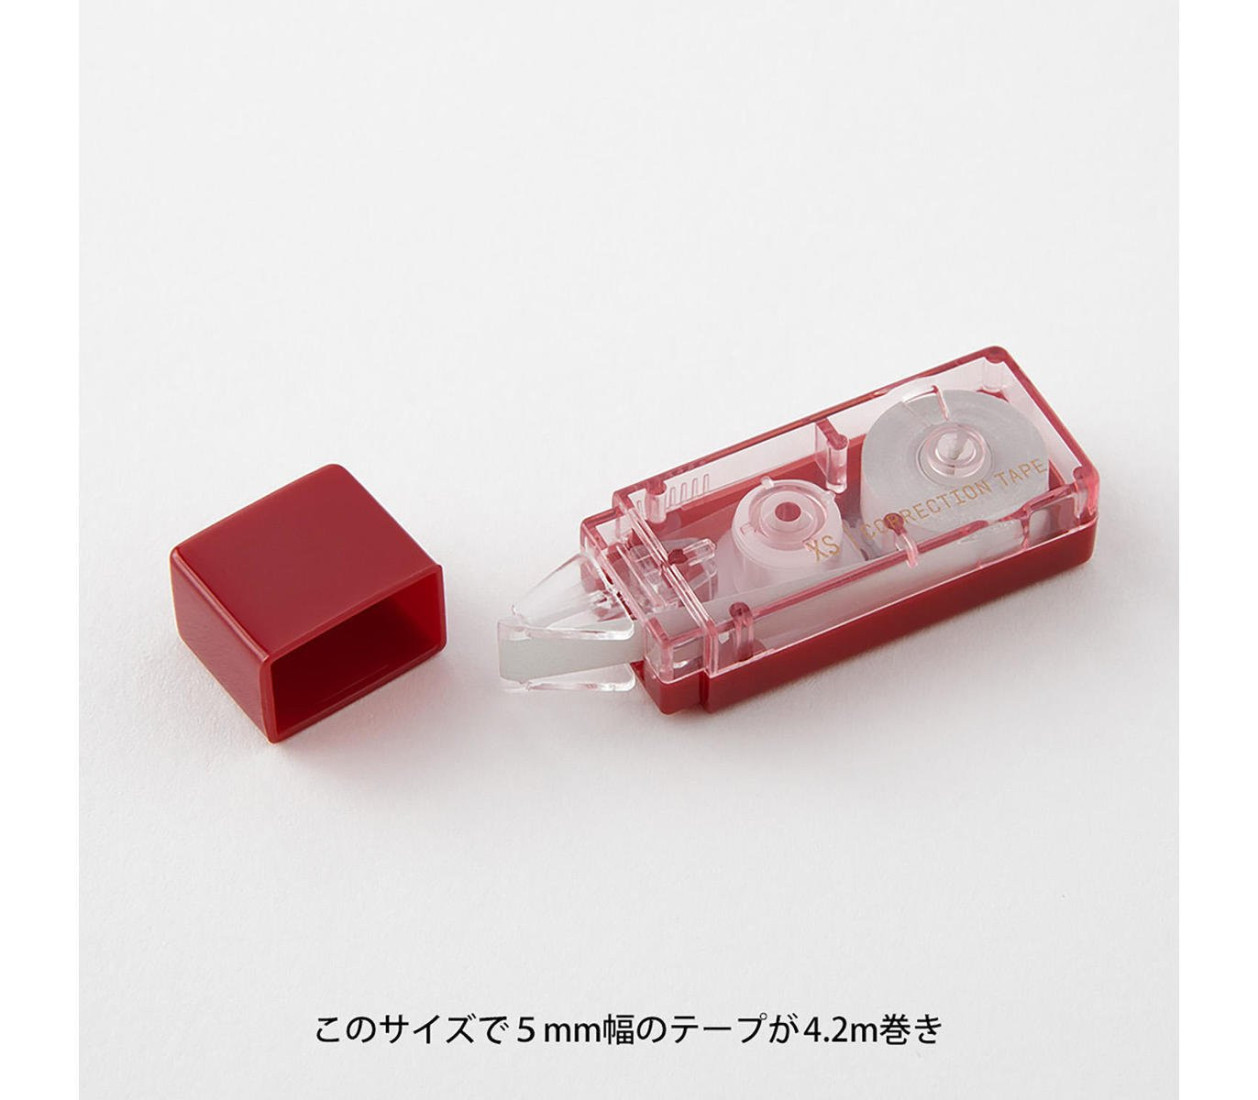 Midori XS (extra small)  Correction Tape Deep Red 35516006